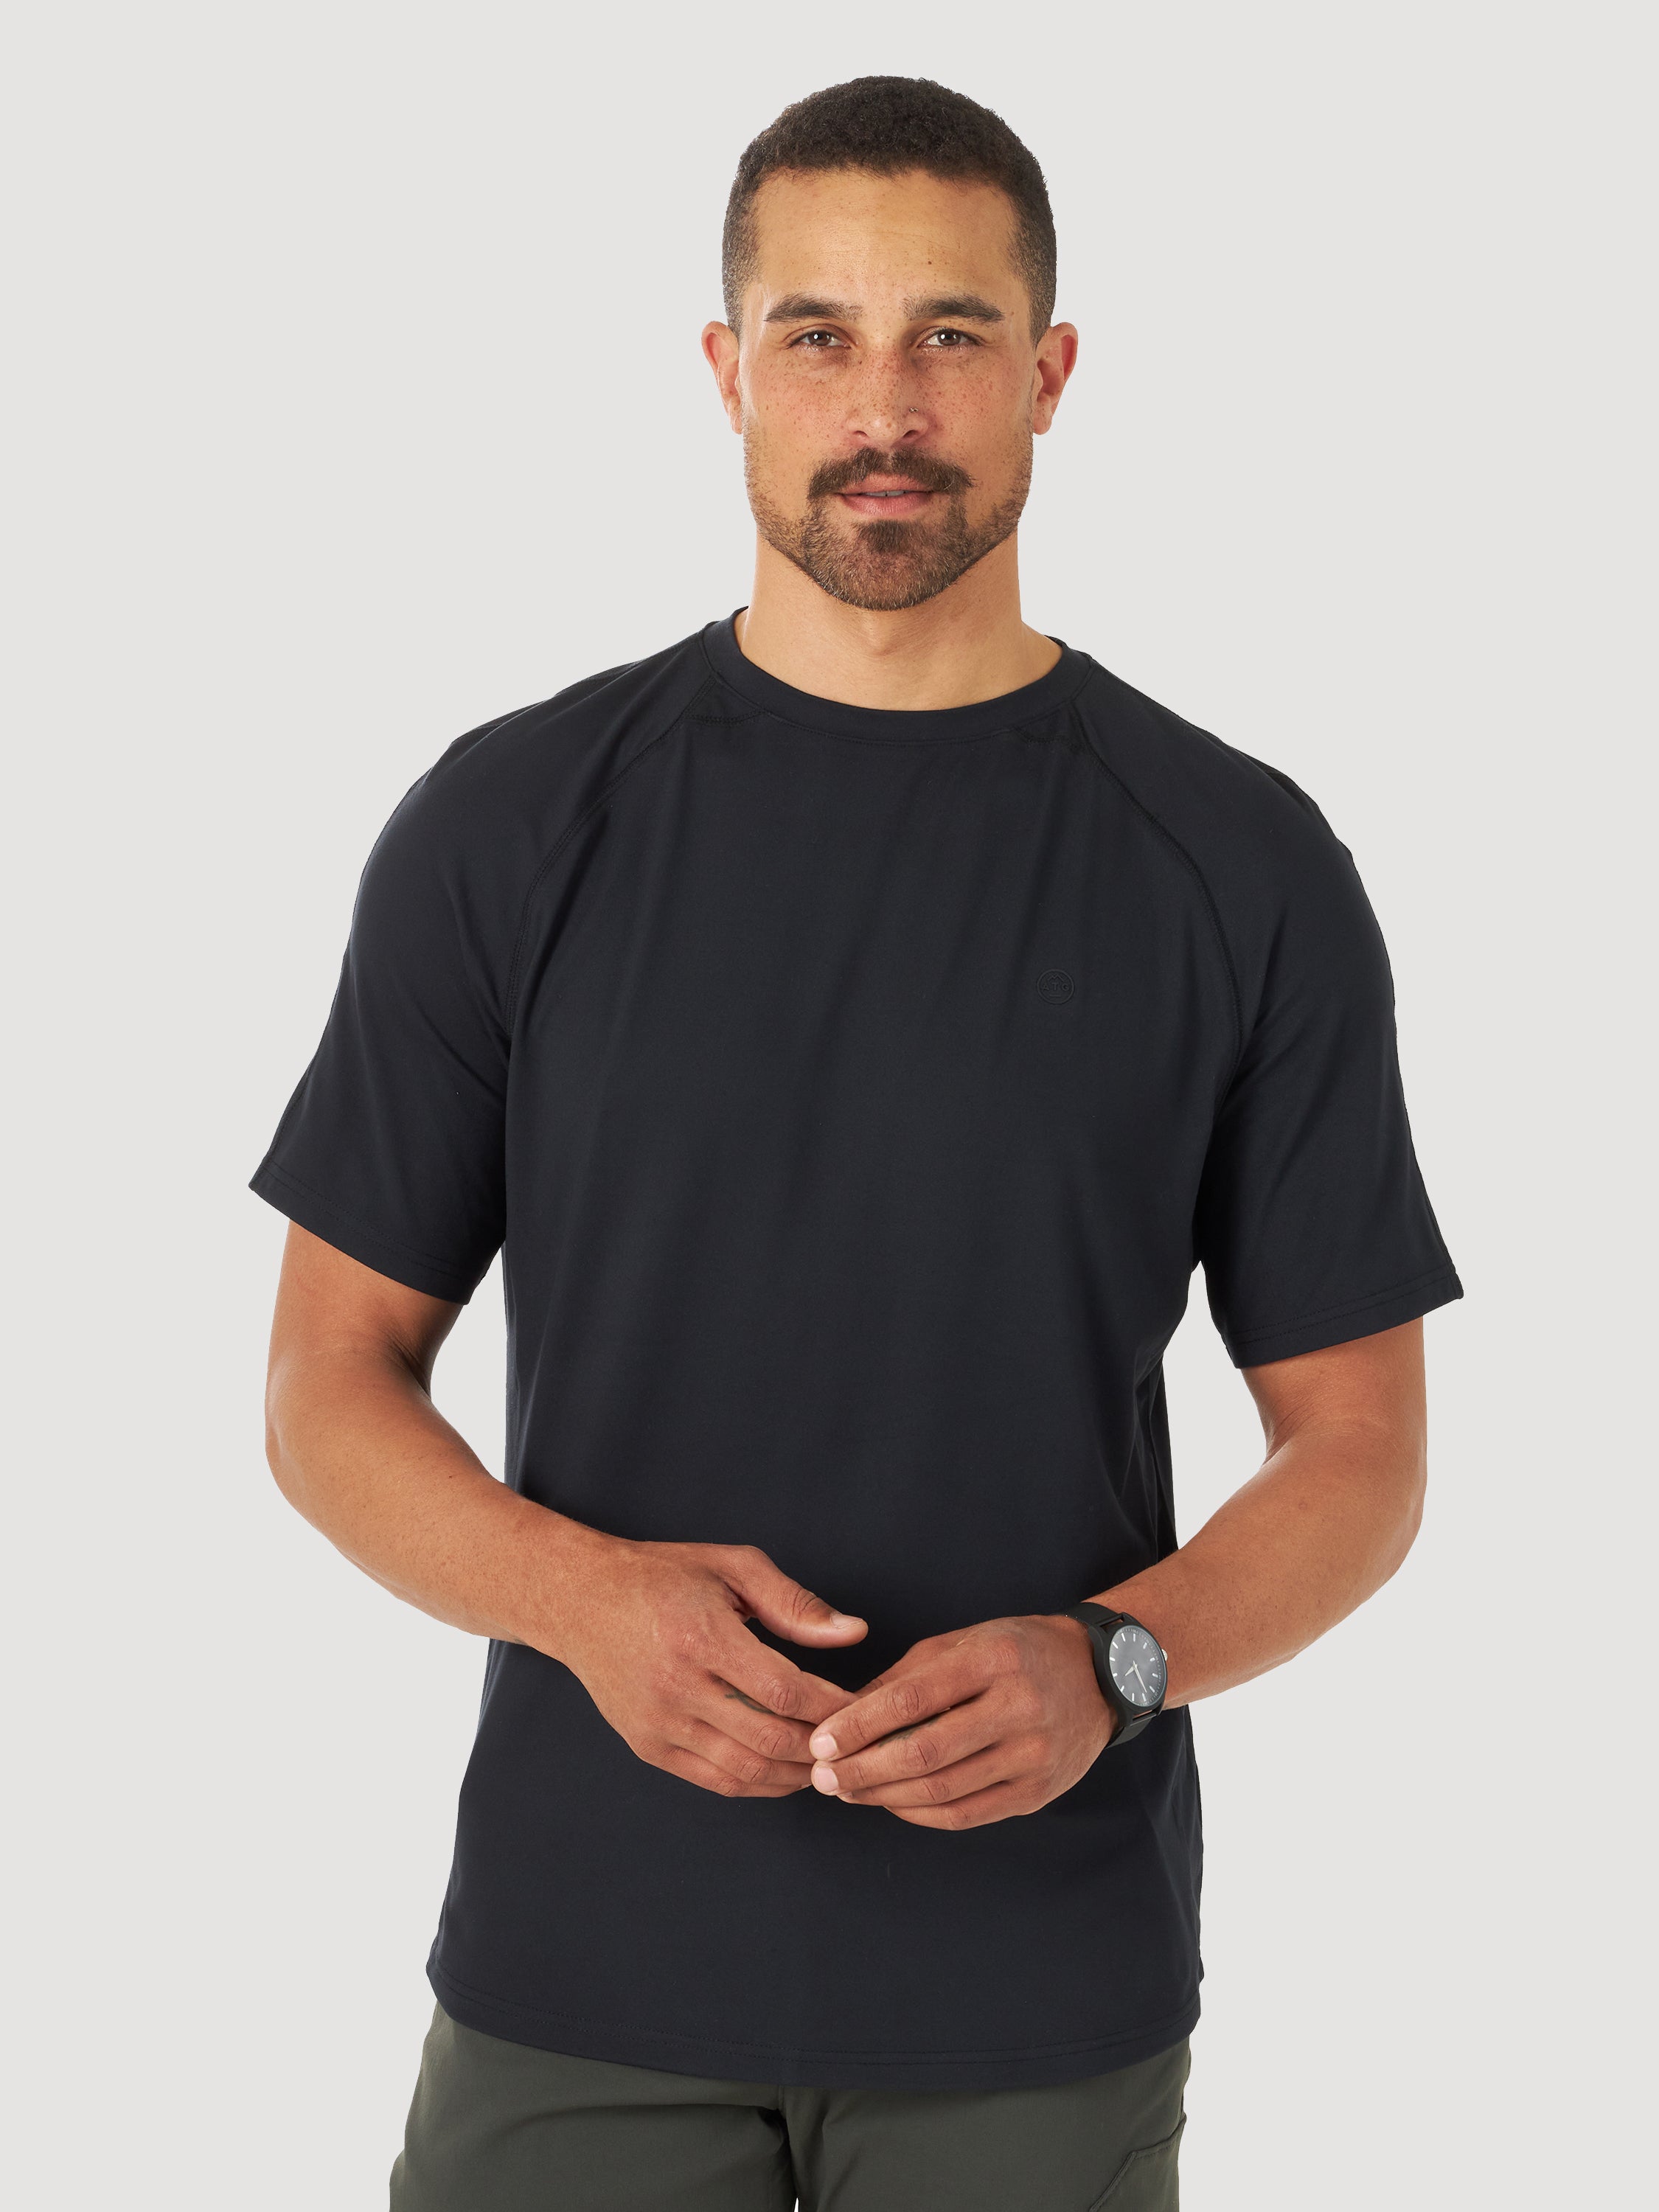 All Terrain Gear Kurzarm Performance Tee in Black T-Shirts Wrangler   